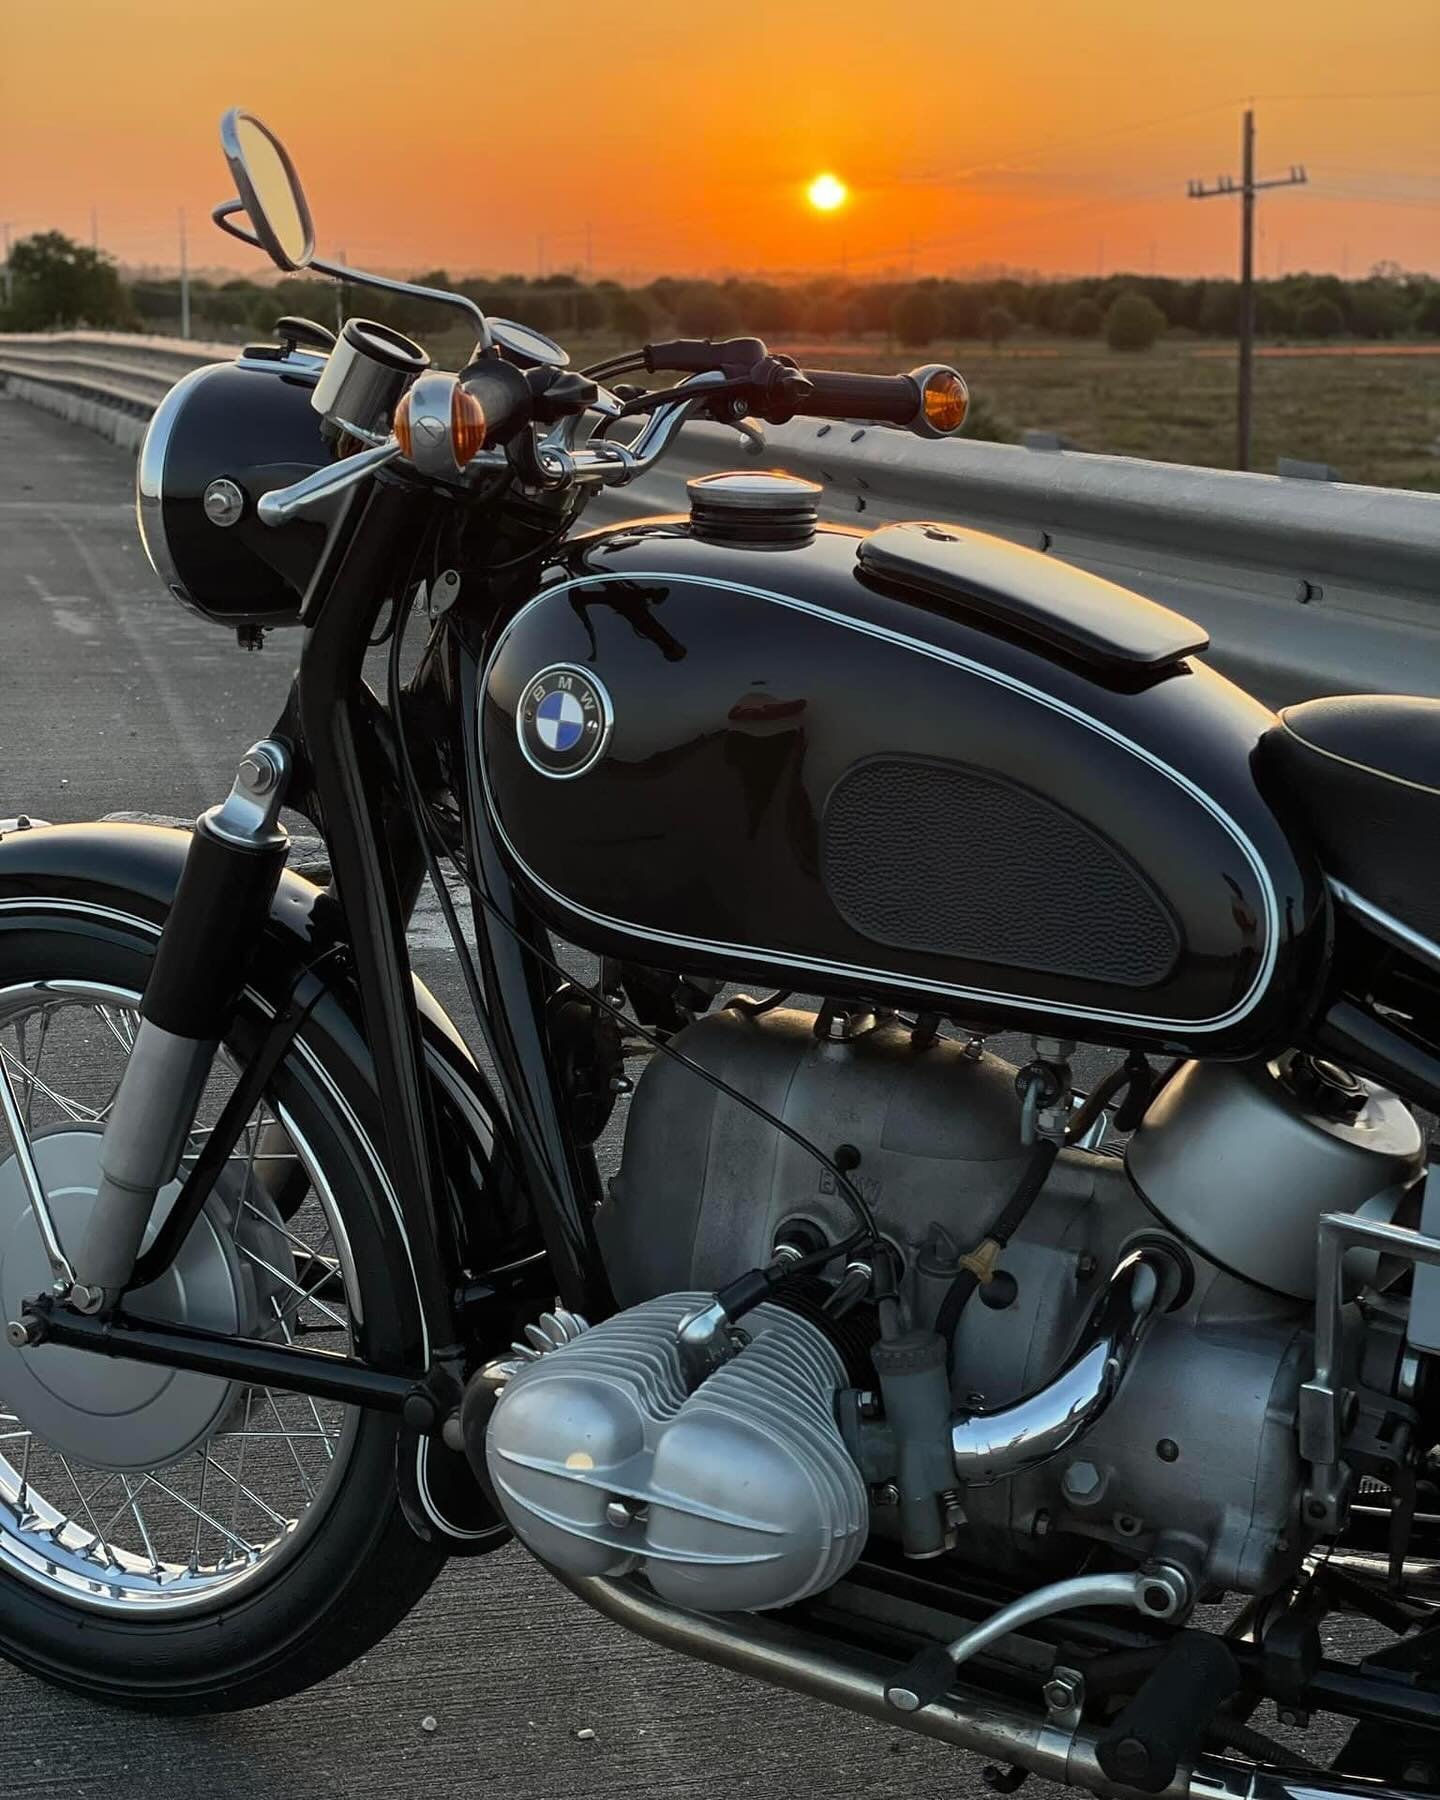 Beautiful ride into the sunset with BMW R60/2
📸 by Andy Jansky
#bmwmotorrad #bmw #motorcycle #classic #vintage
www.darkshadowgarage.com